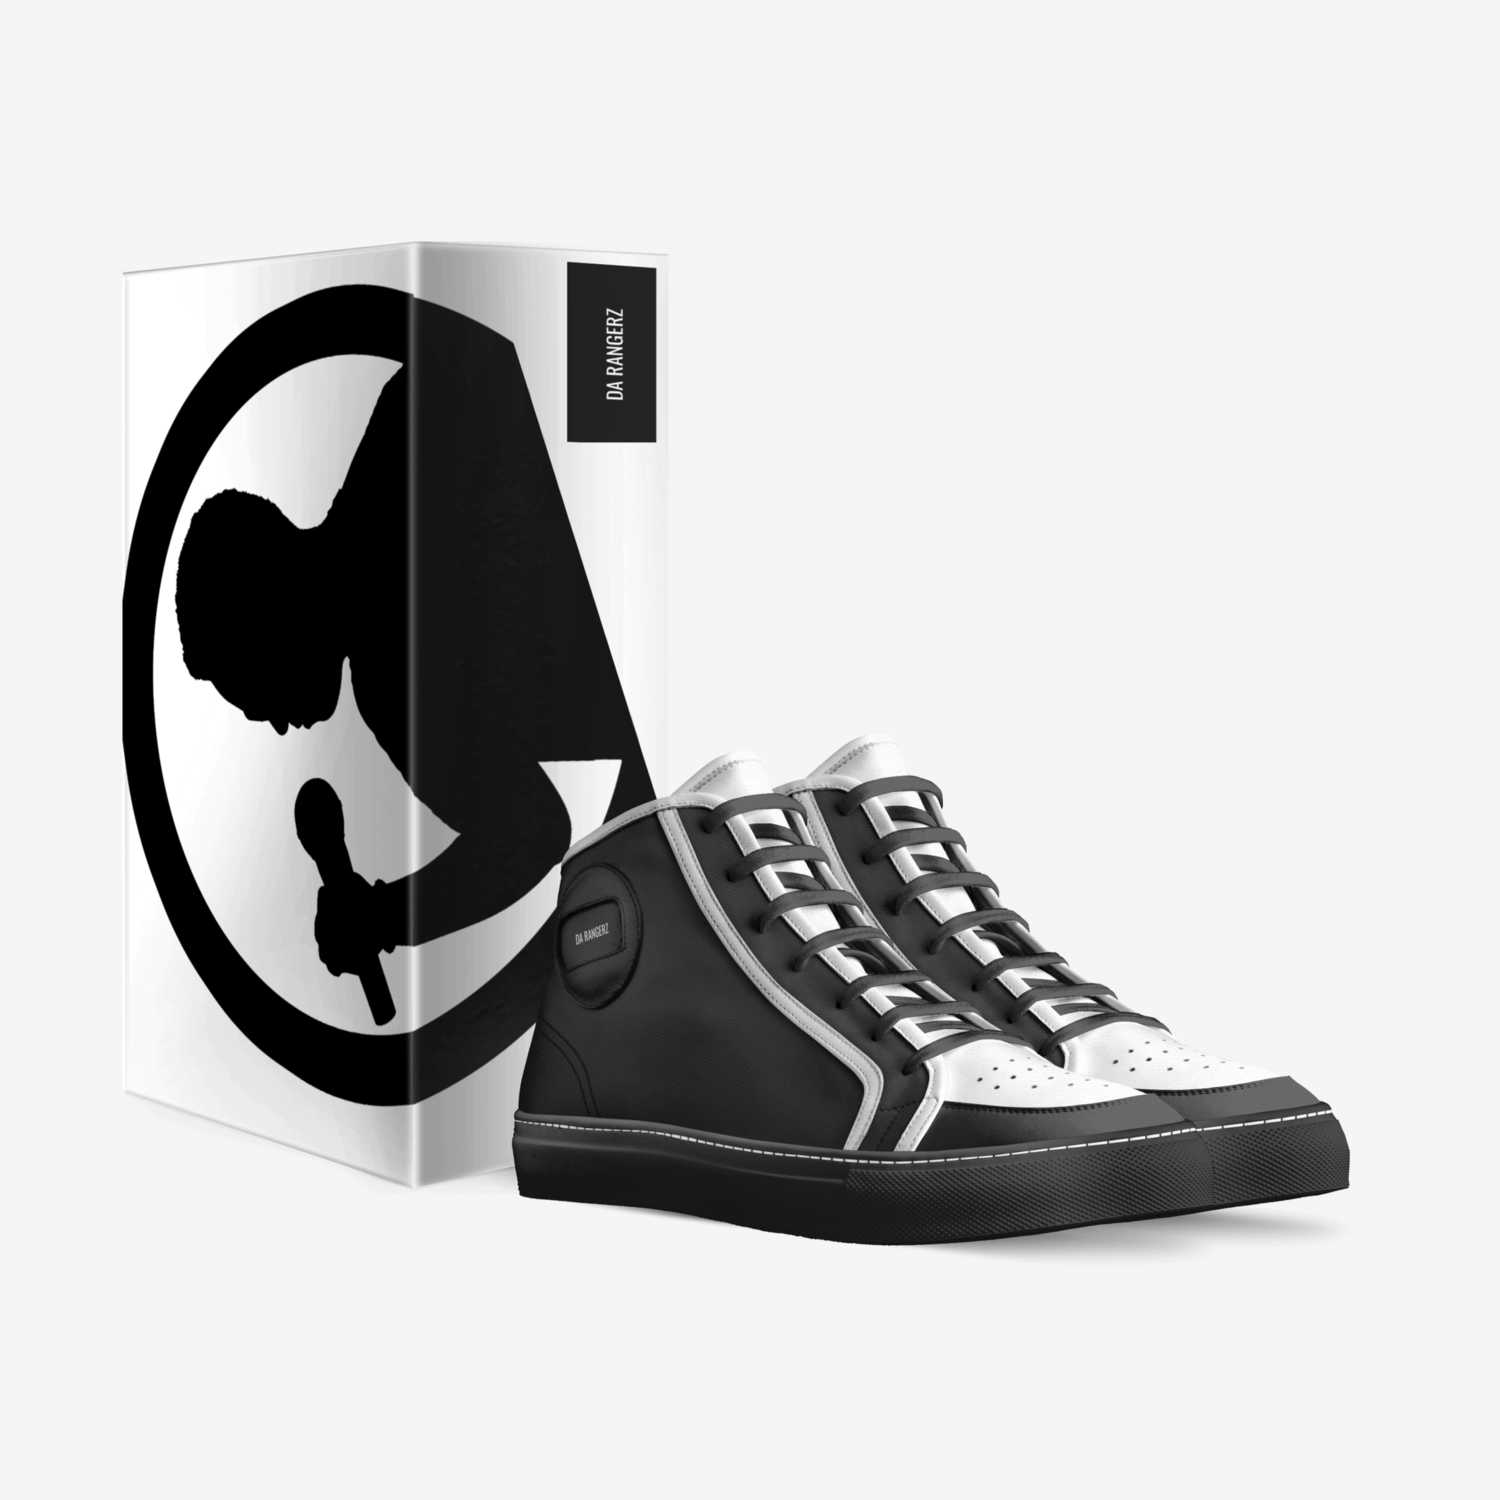 Da Rangerz custom made in Italy shoes by Cleveland Davis | Box view